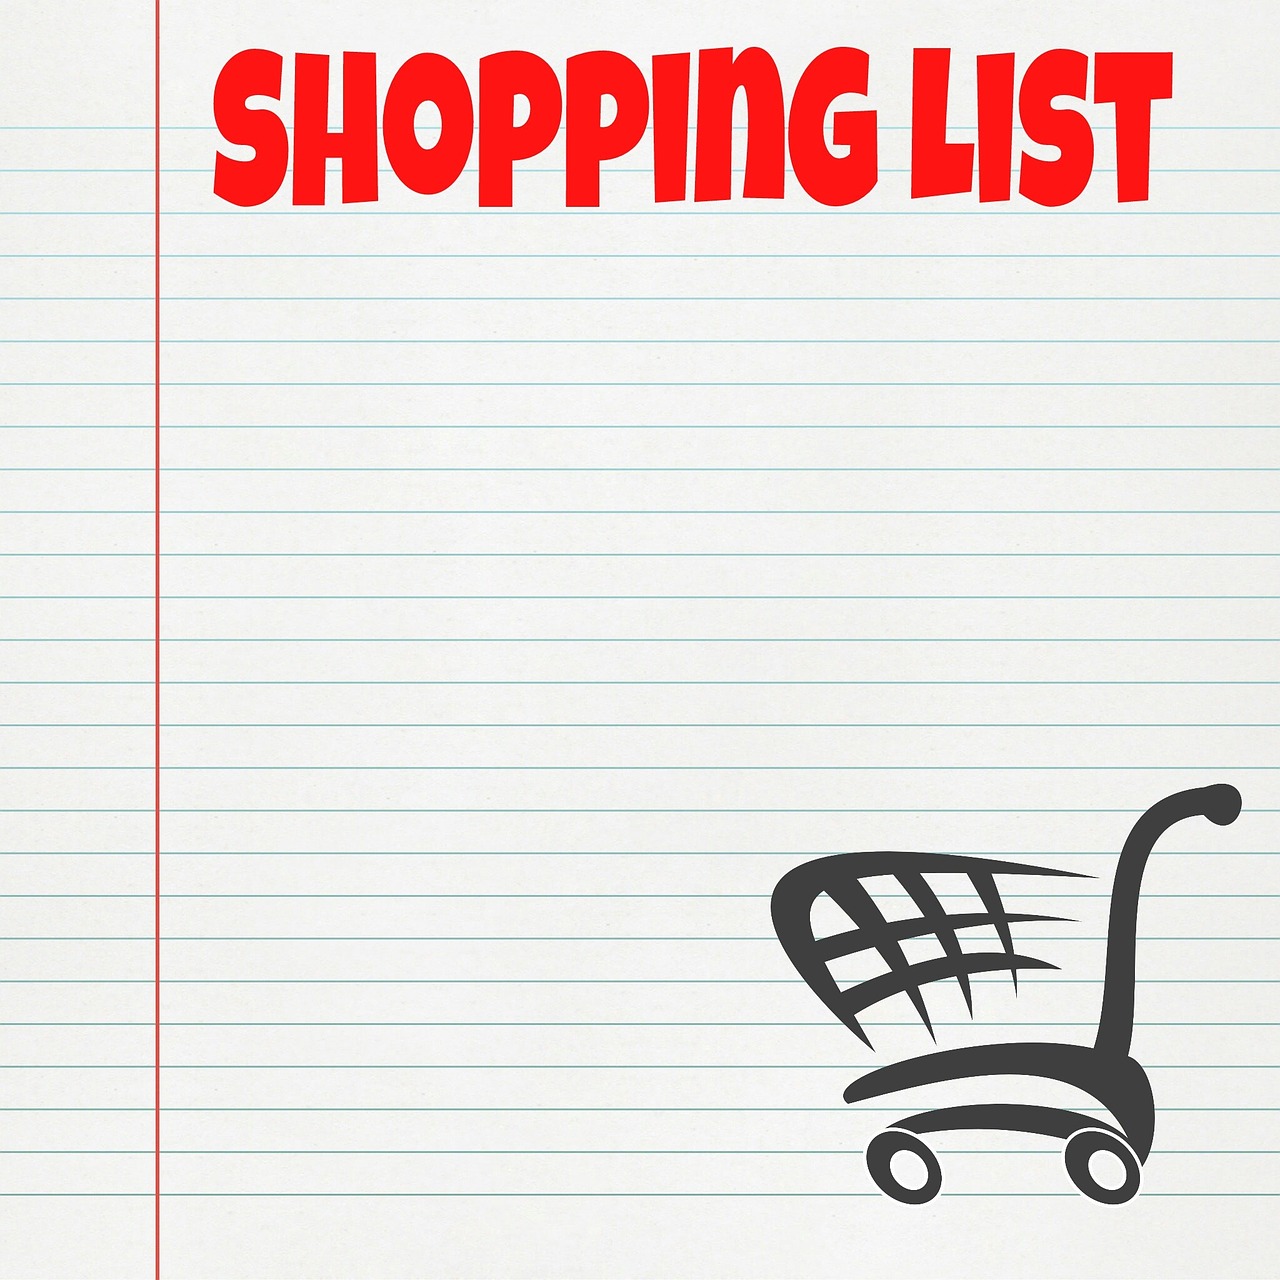 shopping-list-749278_1280